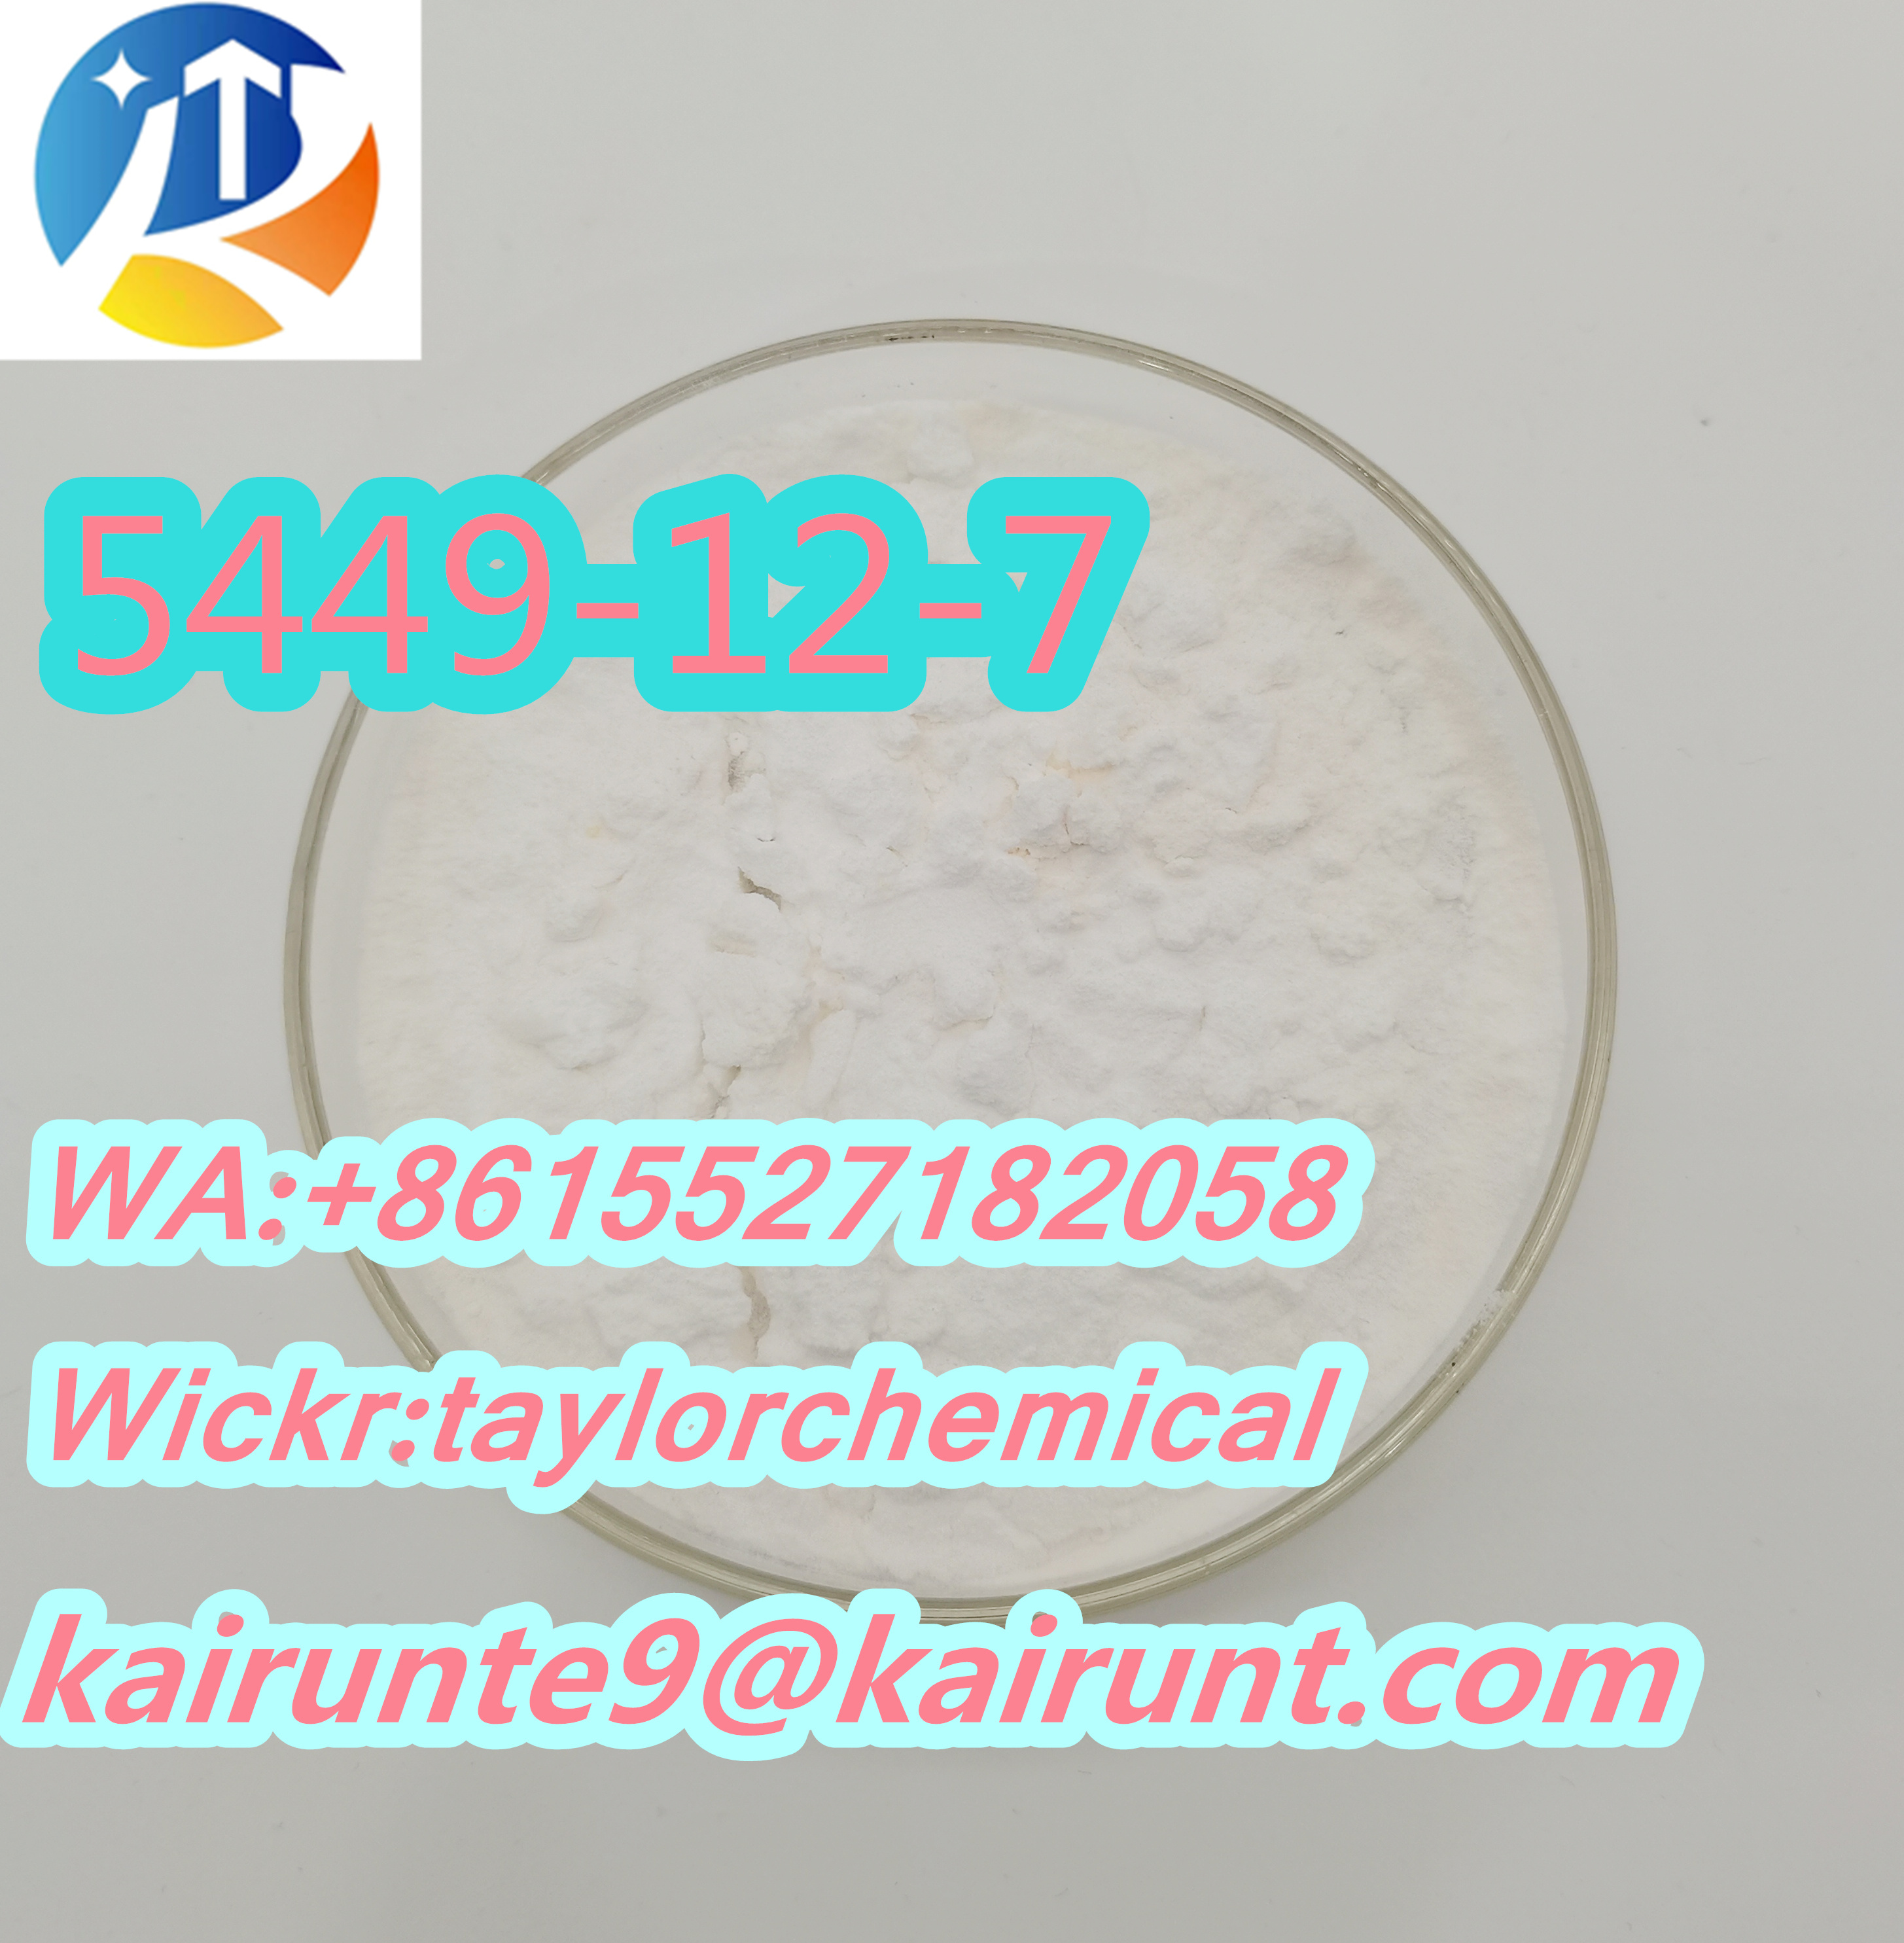 CAS 5449-12-7 BMK powder (sodium salt) รูปที่ 1